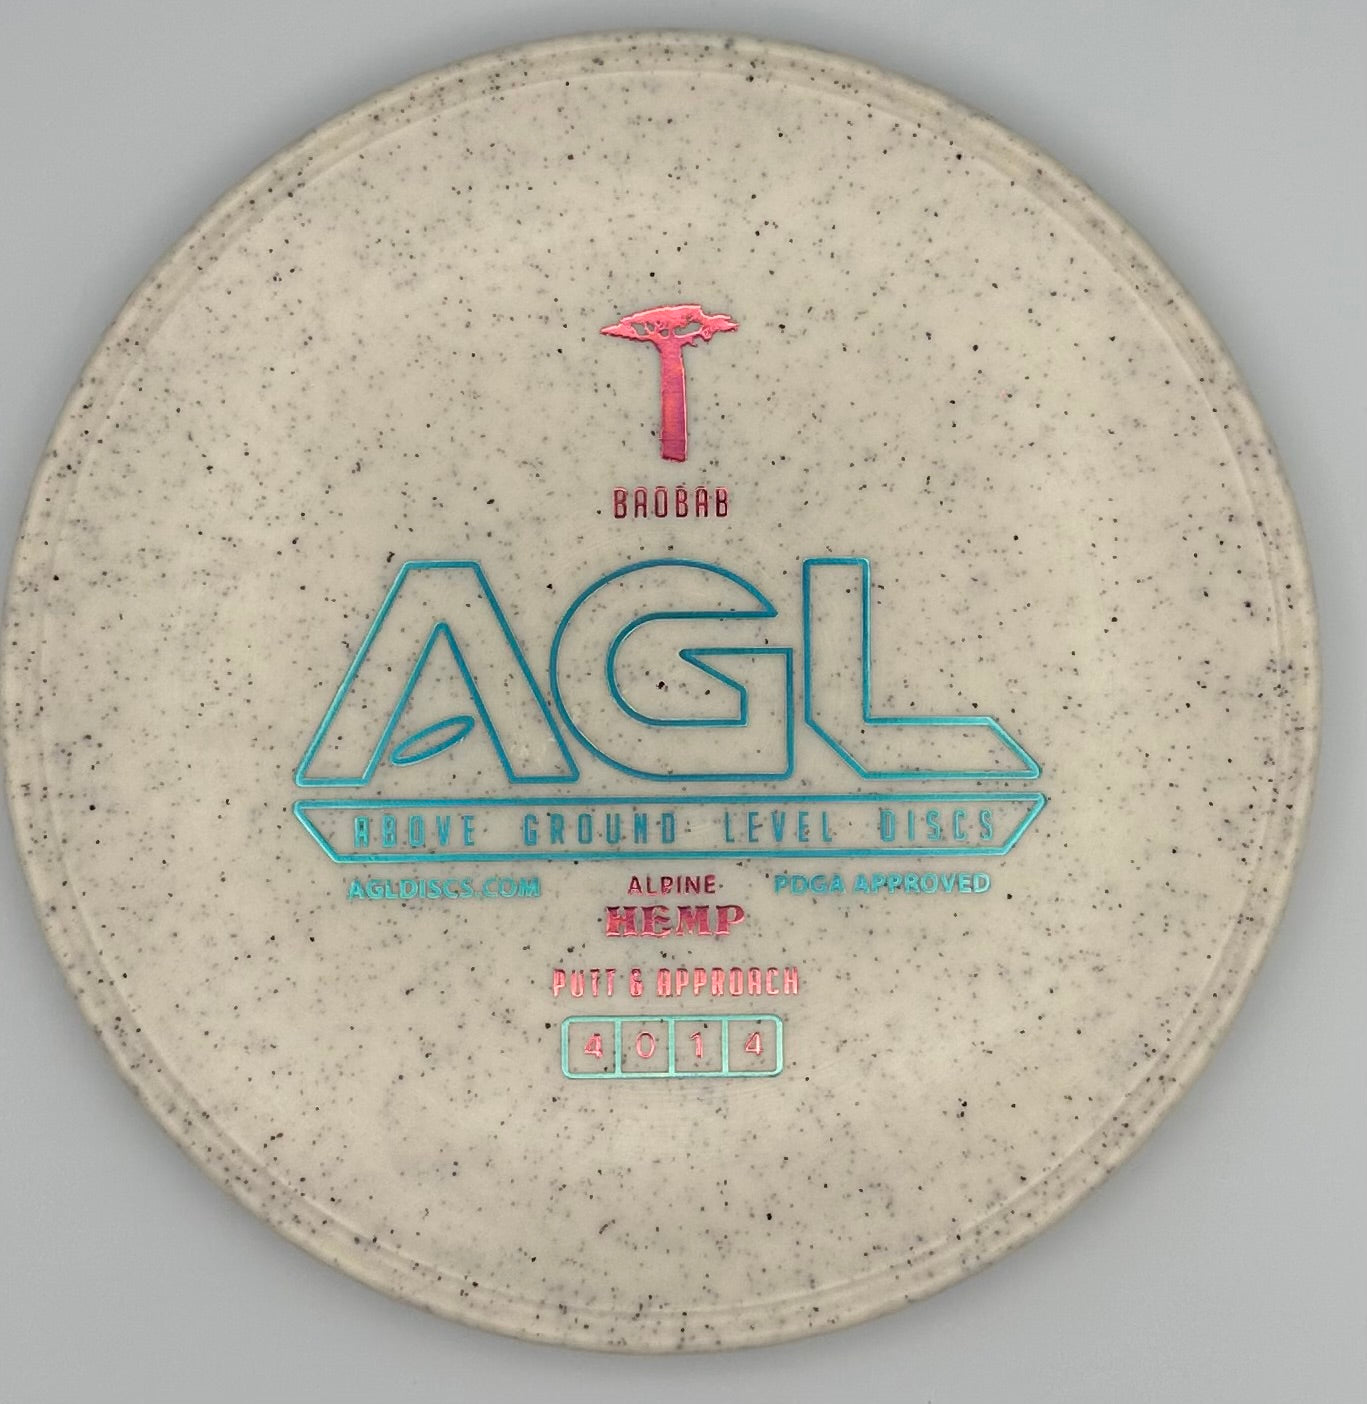 AGL Discs - Cookies and Cream Alpine Hemp Baobab (AGL Bar Stamp)